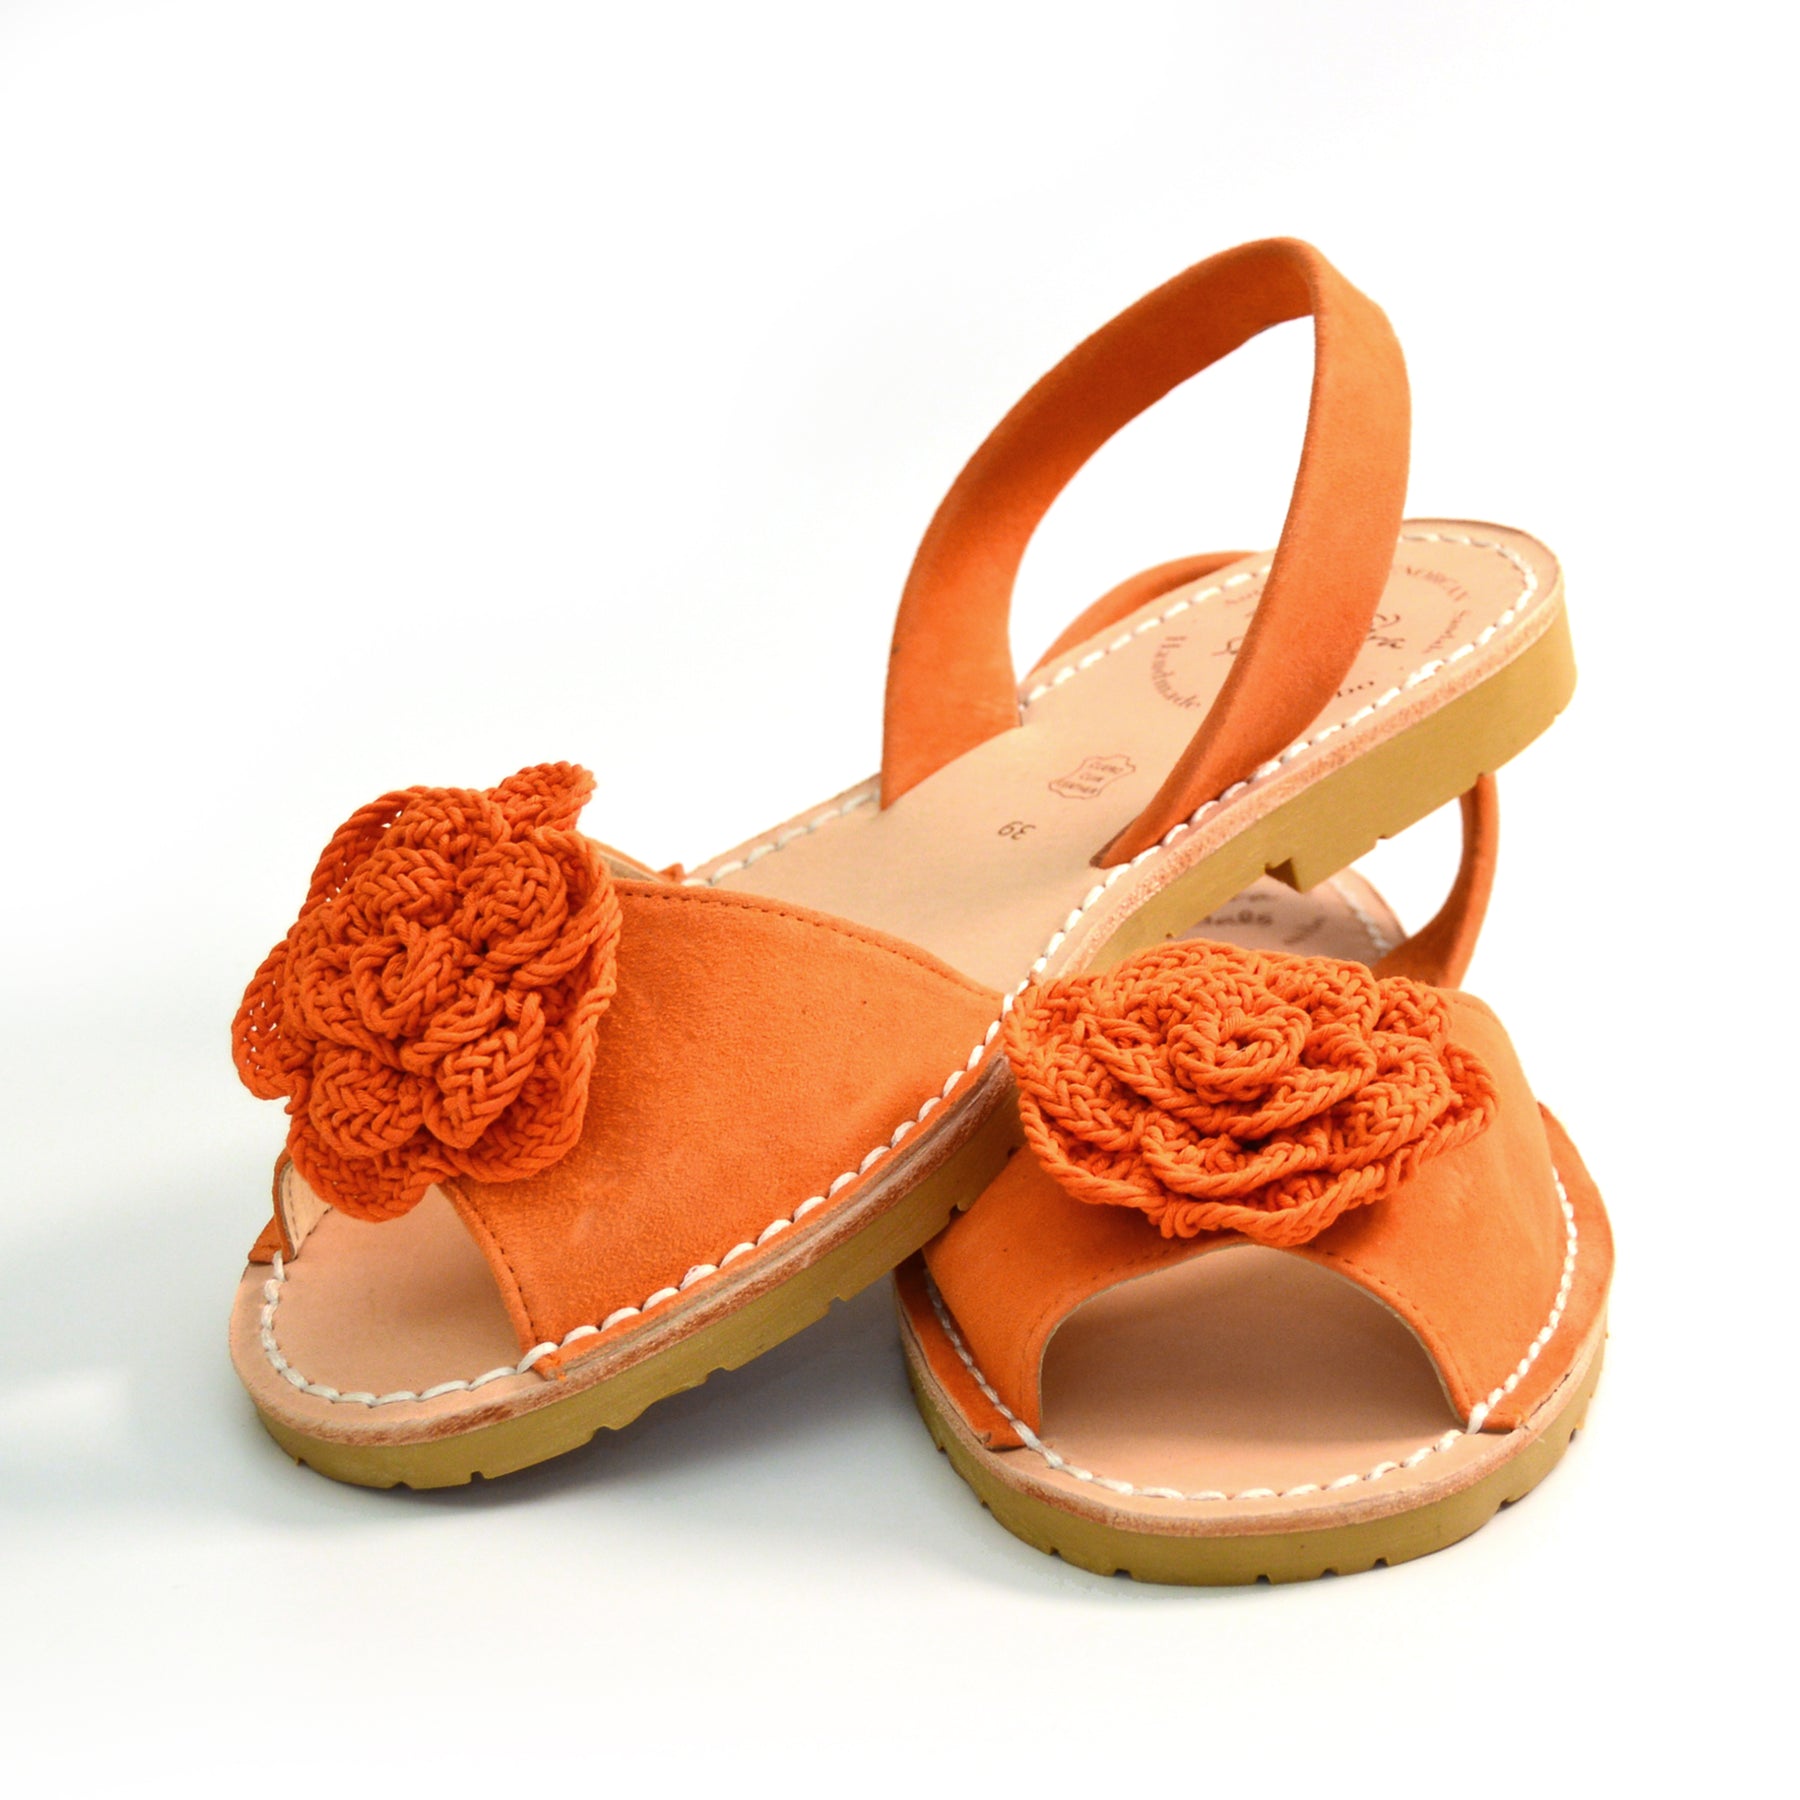 orange suede peeptoe slinback with a flower embellishment avarcas menorcan sandals